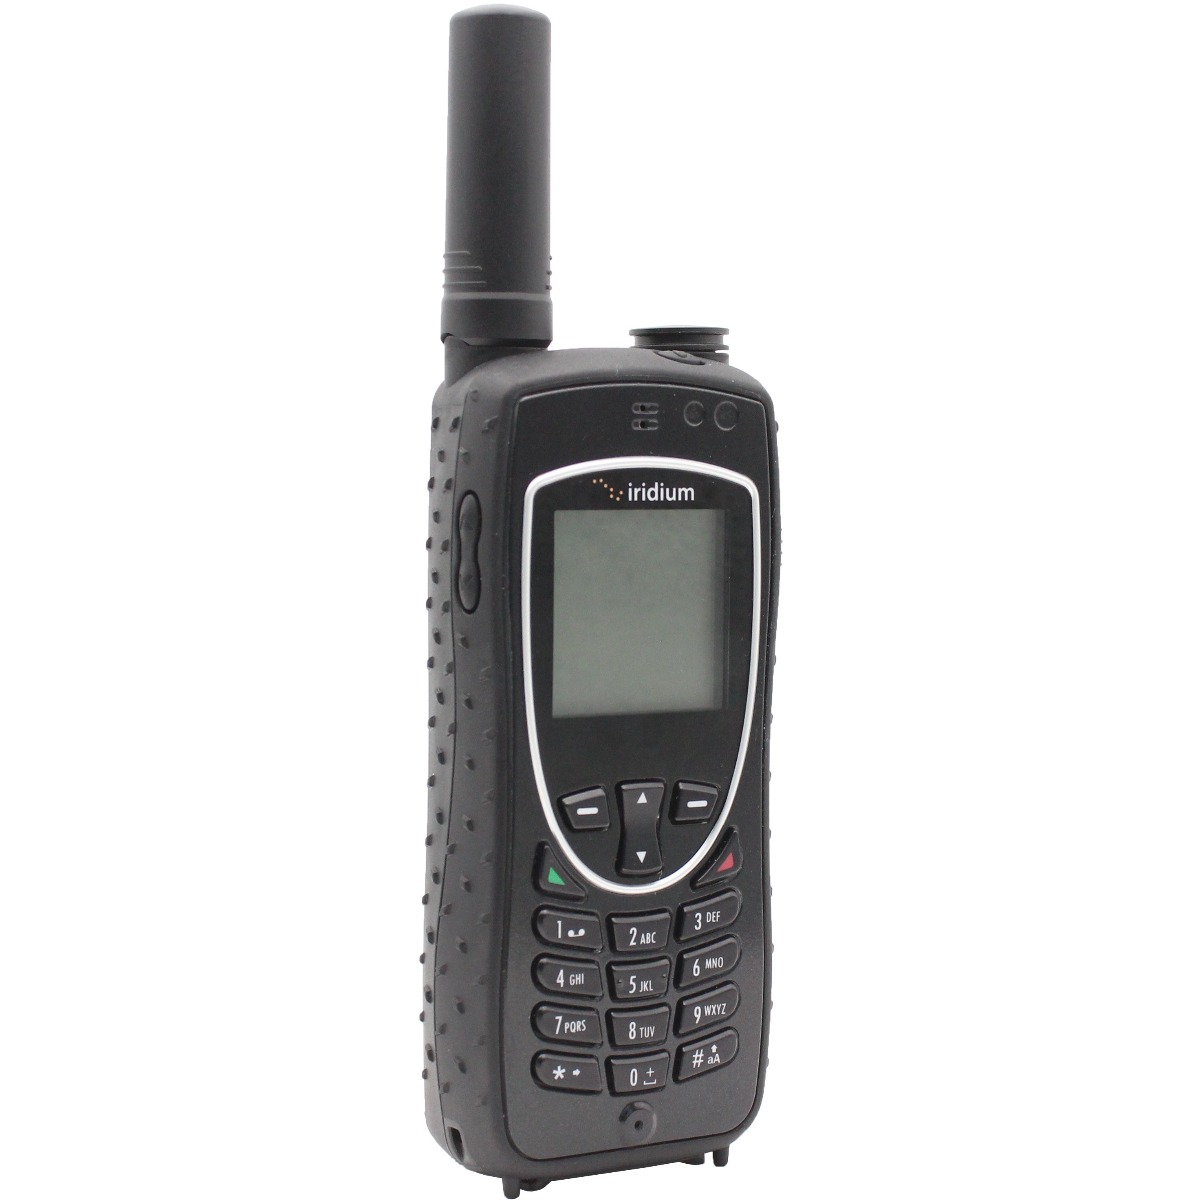 Iridium 9575 Extreme Satellite Phone (CPKT1101) - Asia Satellite